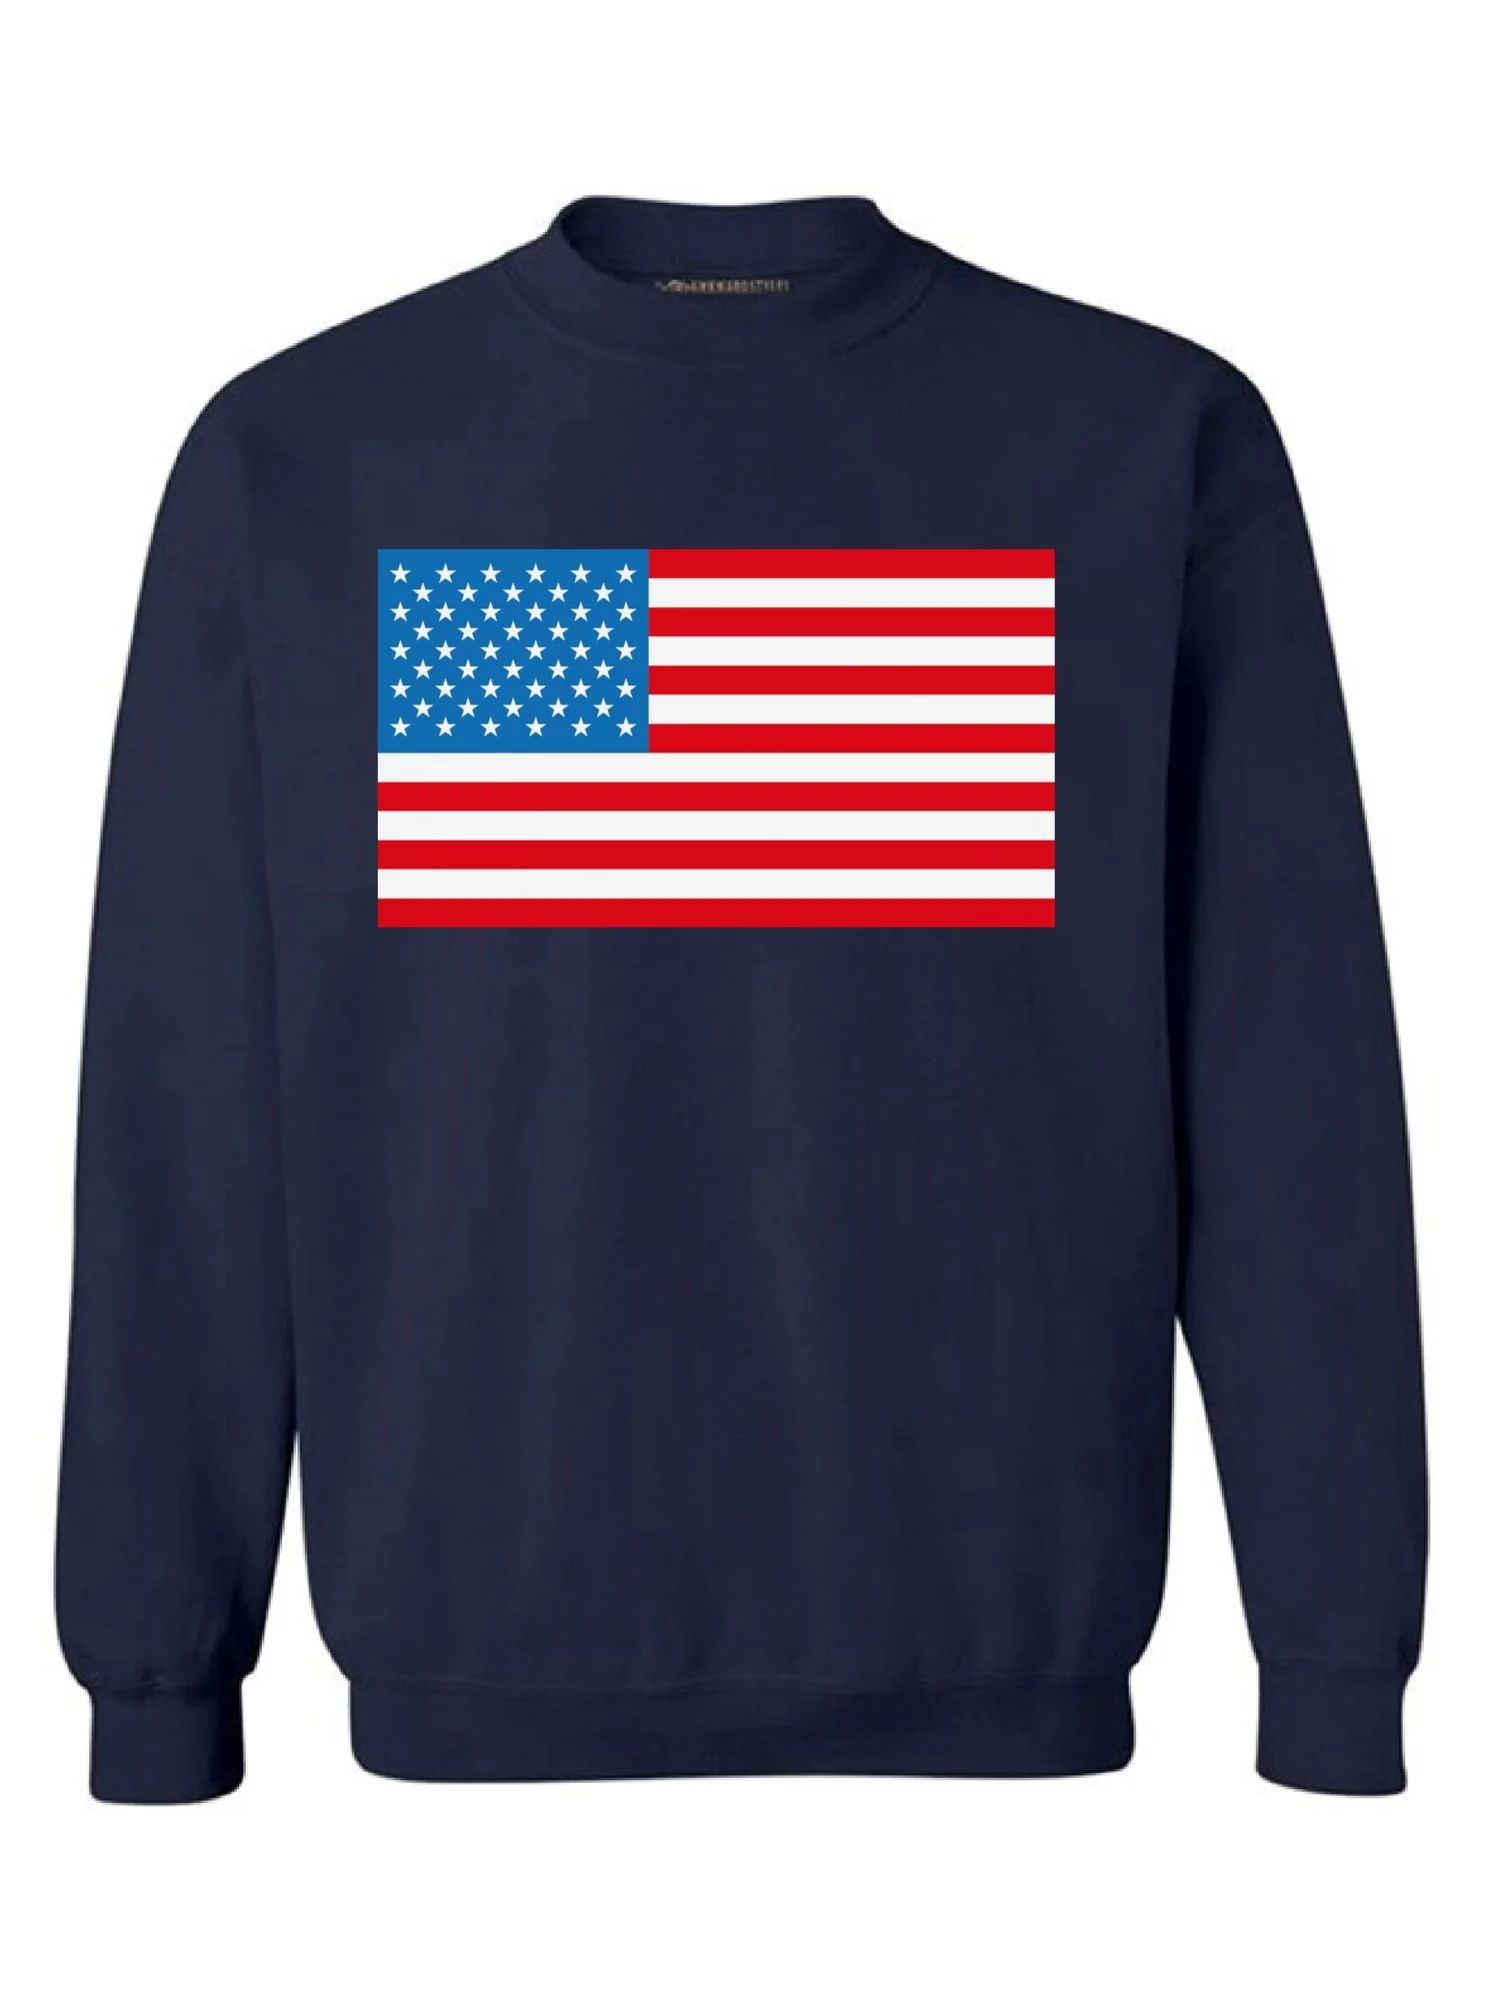 Awkward Styles Unisex American Flag Graphic Sweatshirt Tops USA Flag Patriotic | Walmart (US)